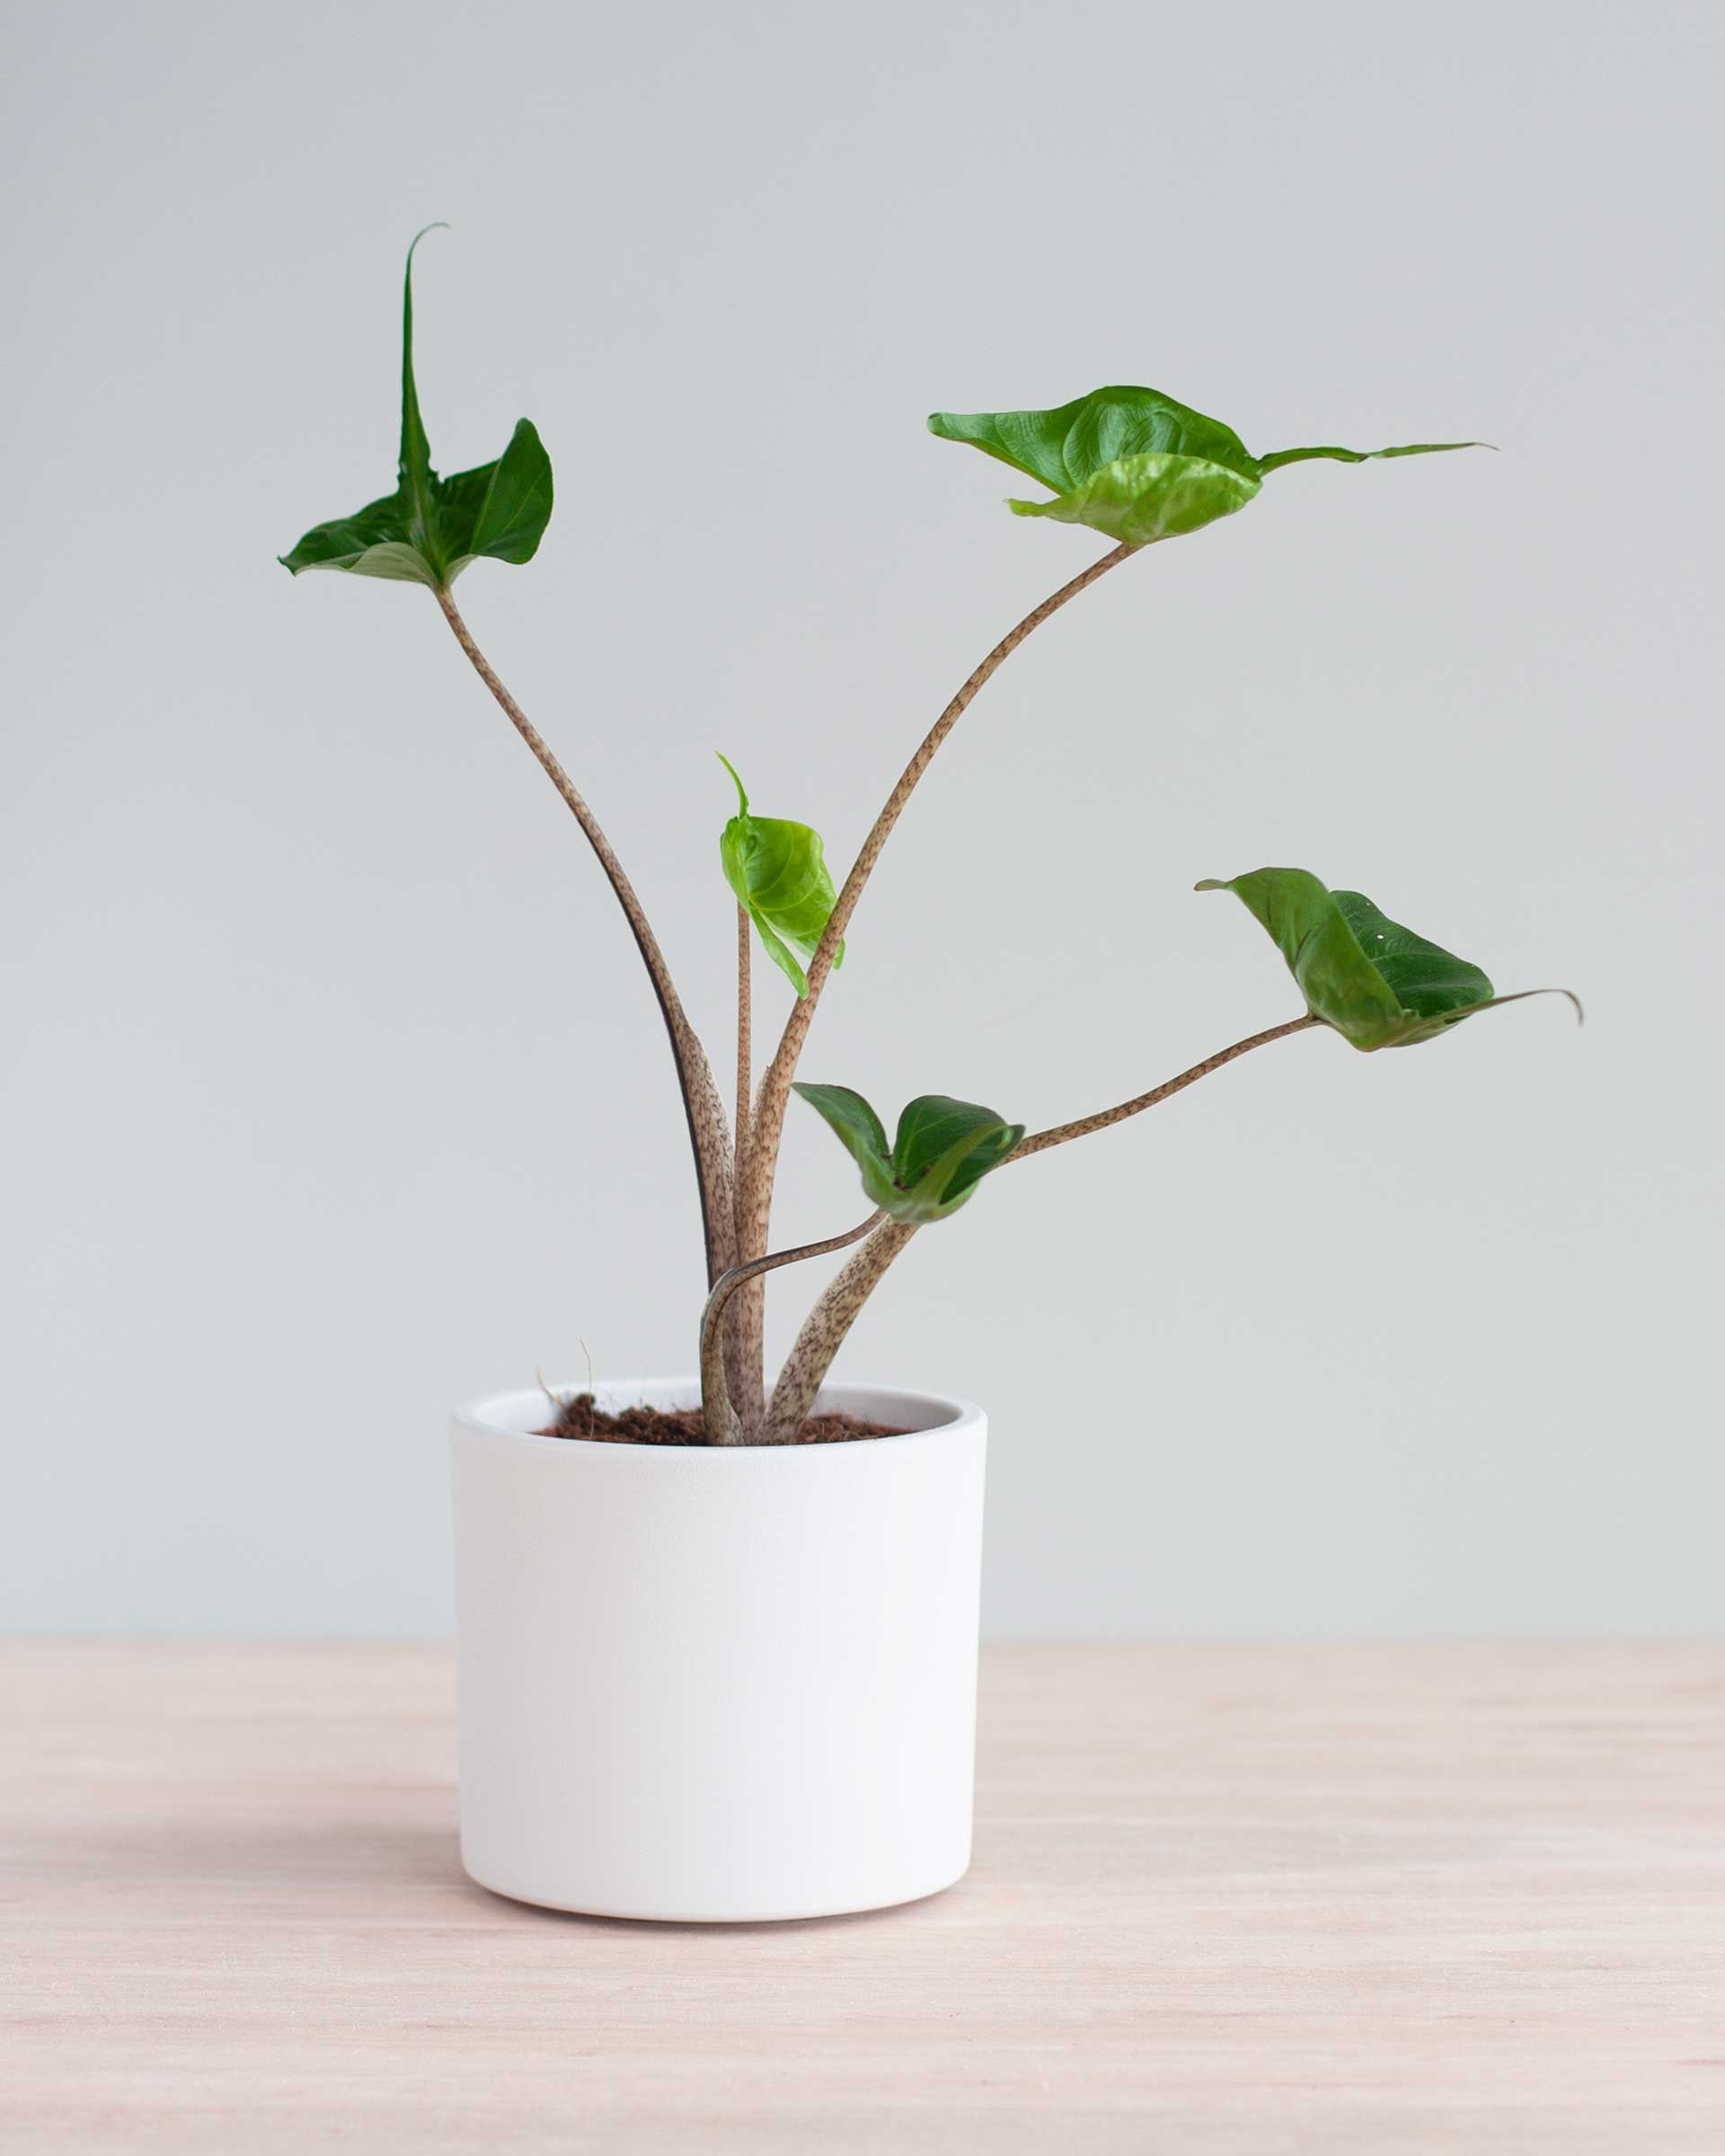 alocasia stingray m (pijlstaartplant) online kaufen | plnts